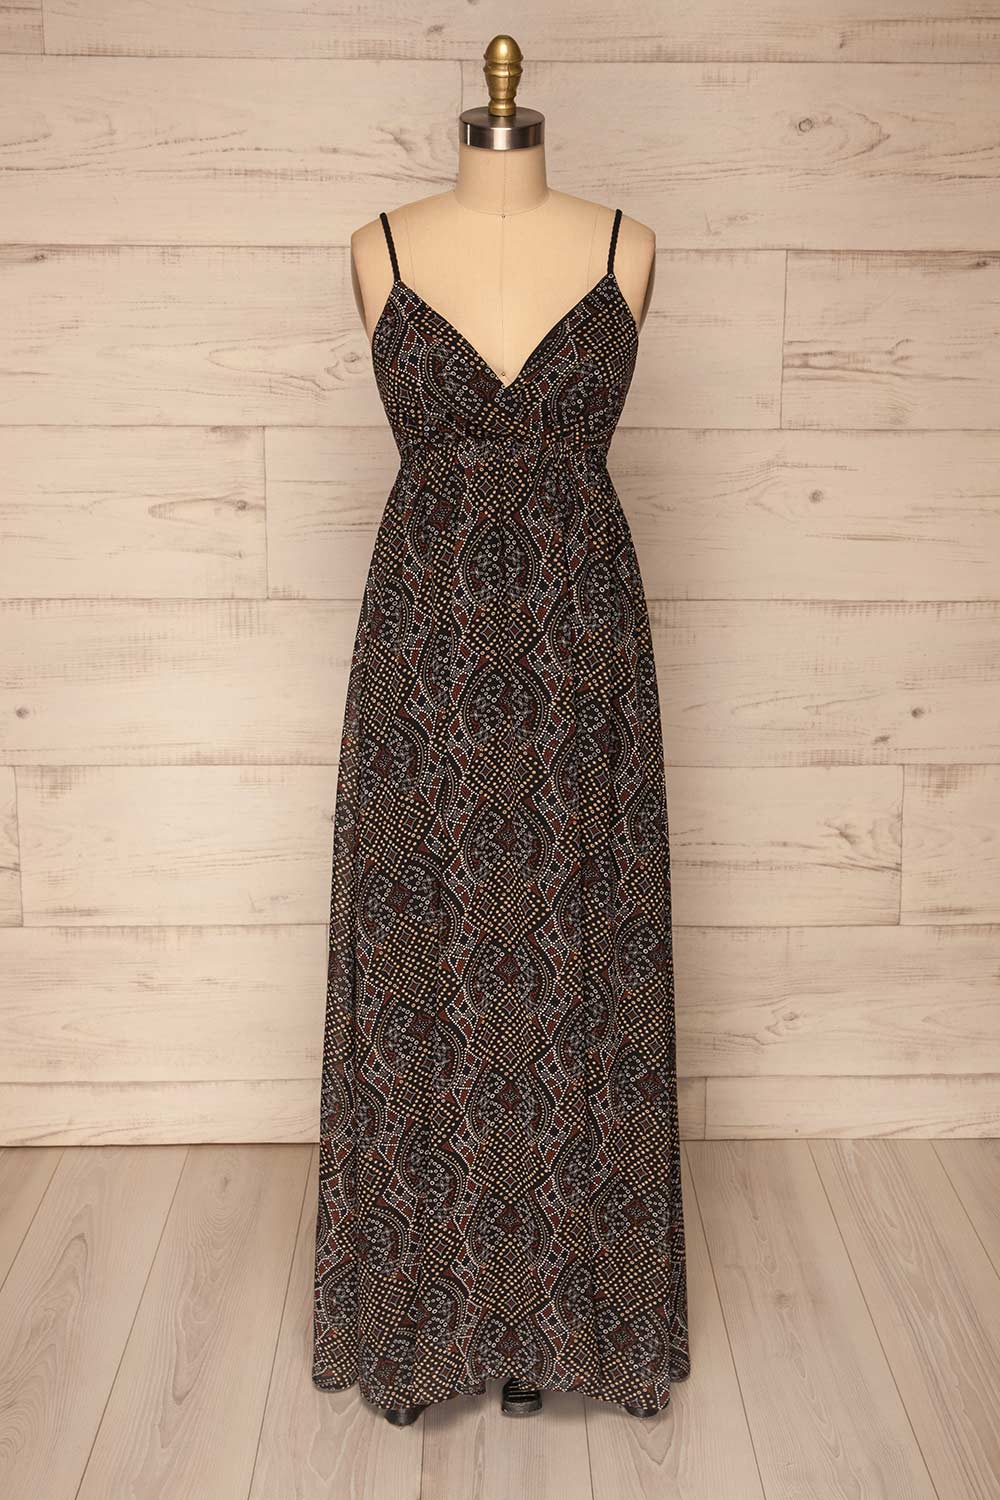 Eidsoyra Black & Pattern Maxi Summer Dress | La petite garçonne front view 